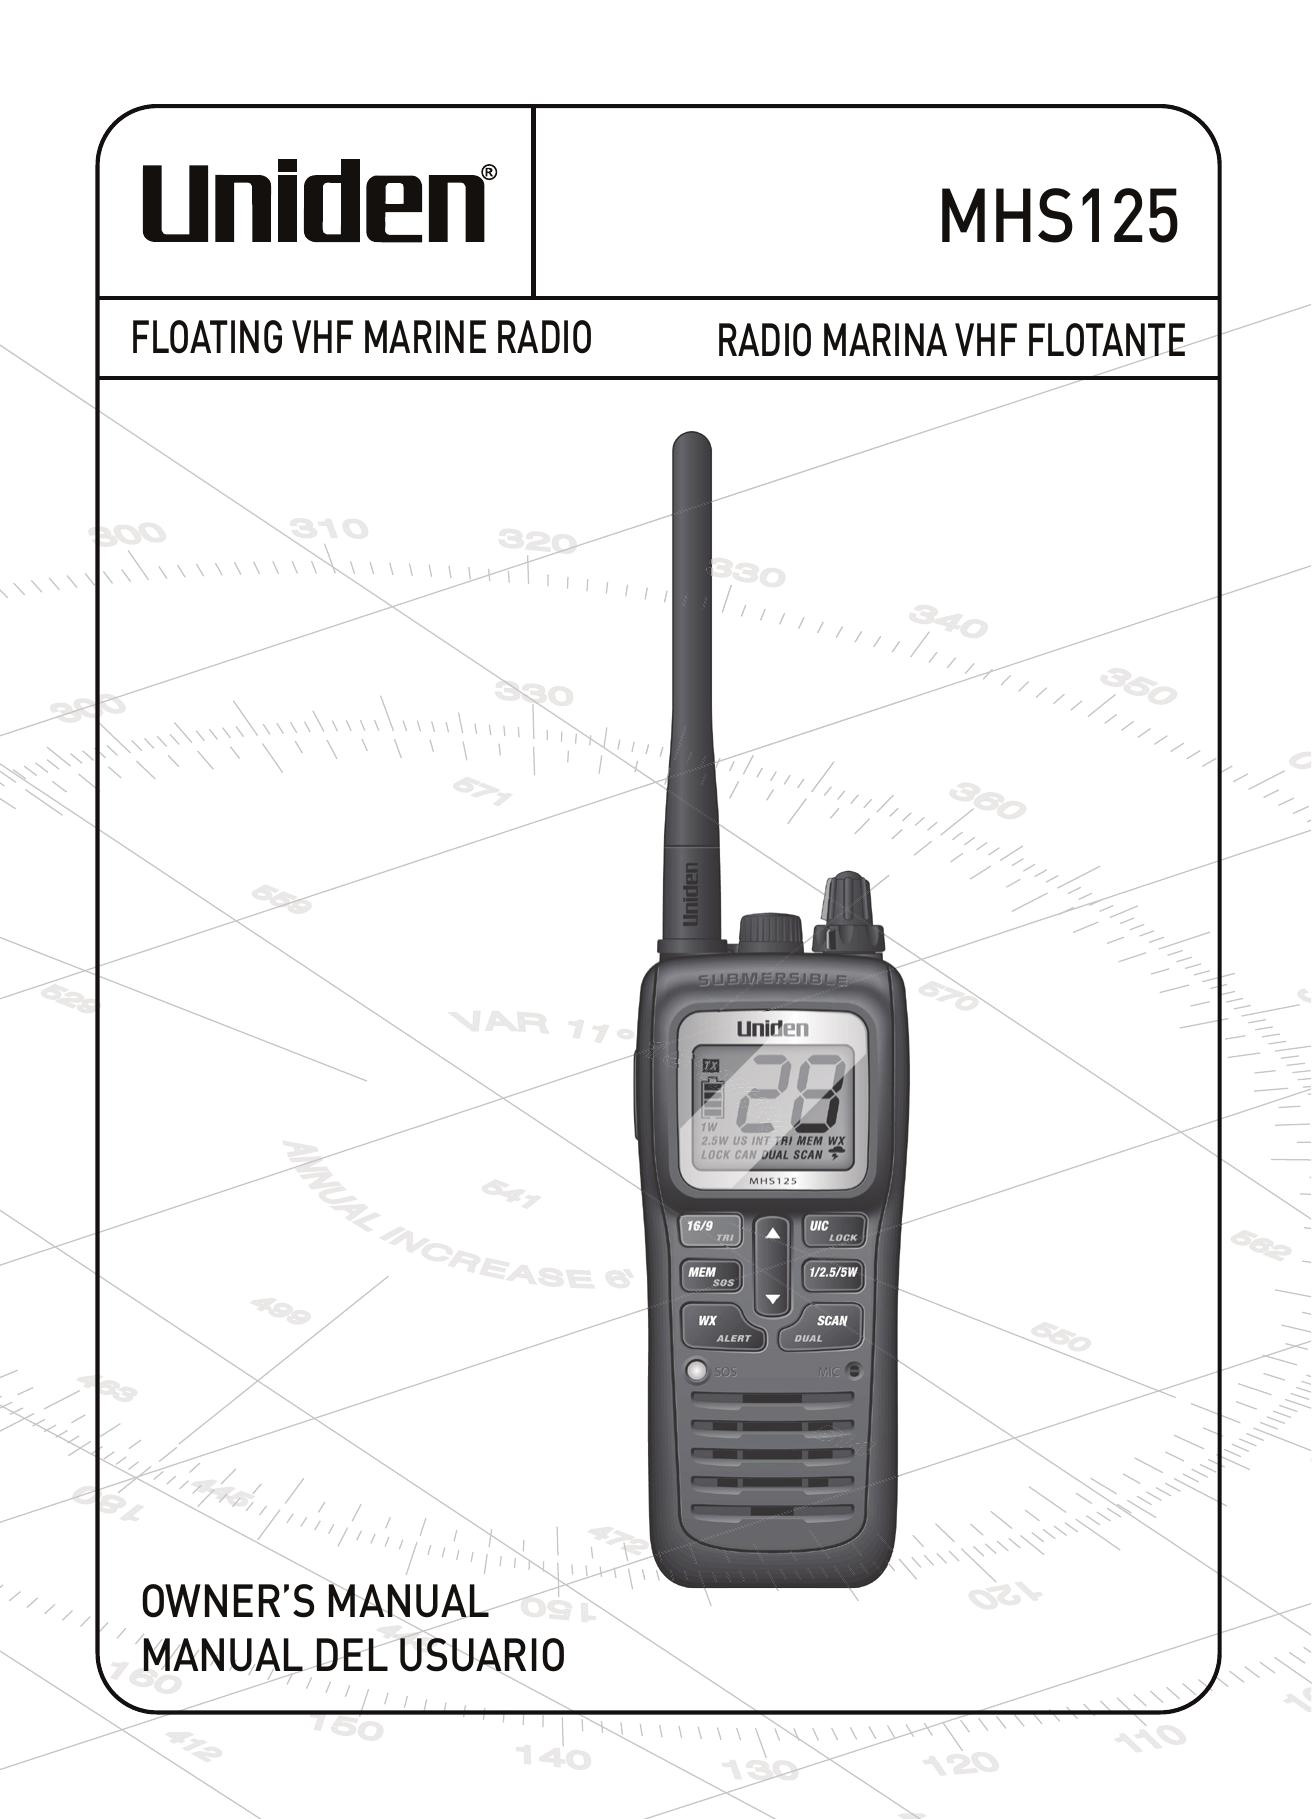 Uniden MHS125 Marine Radio User Manual